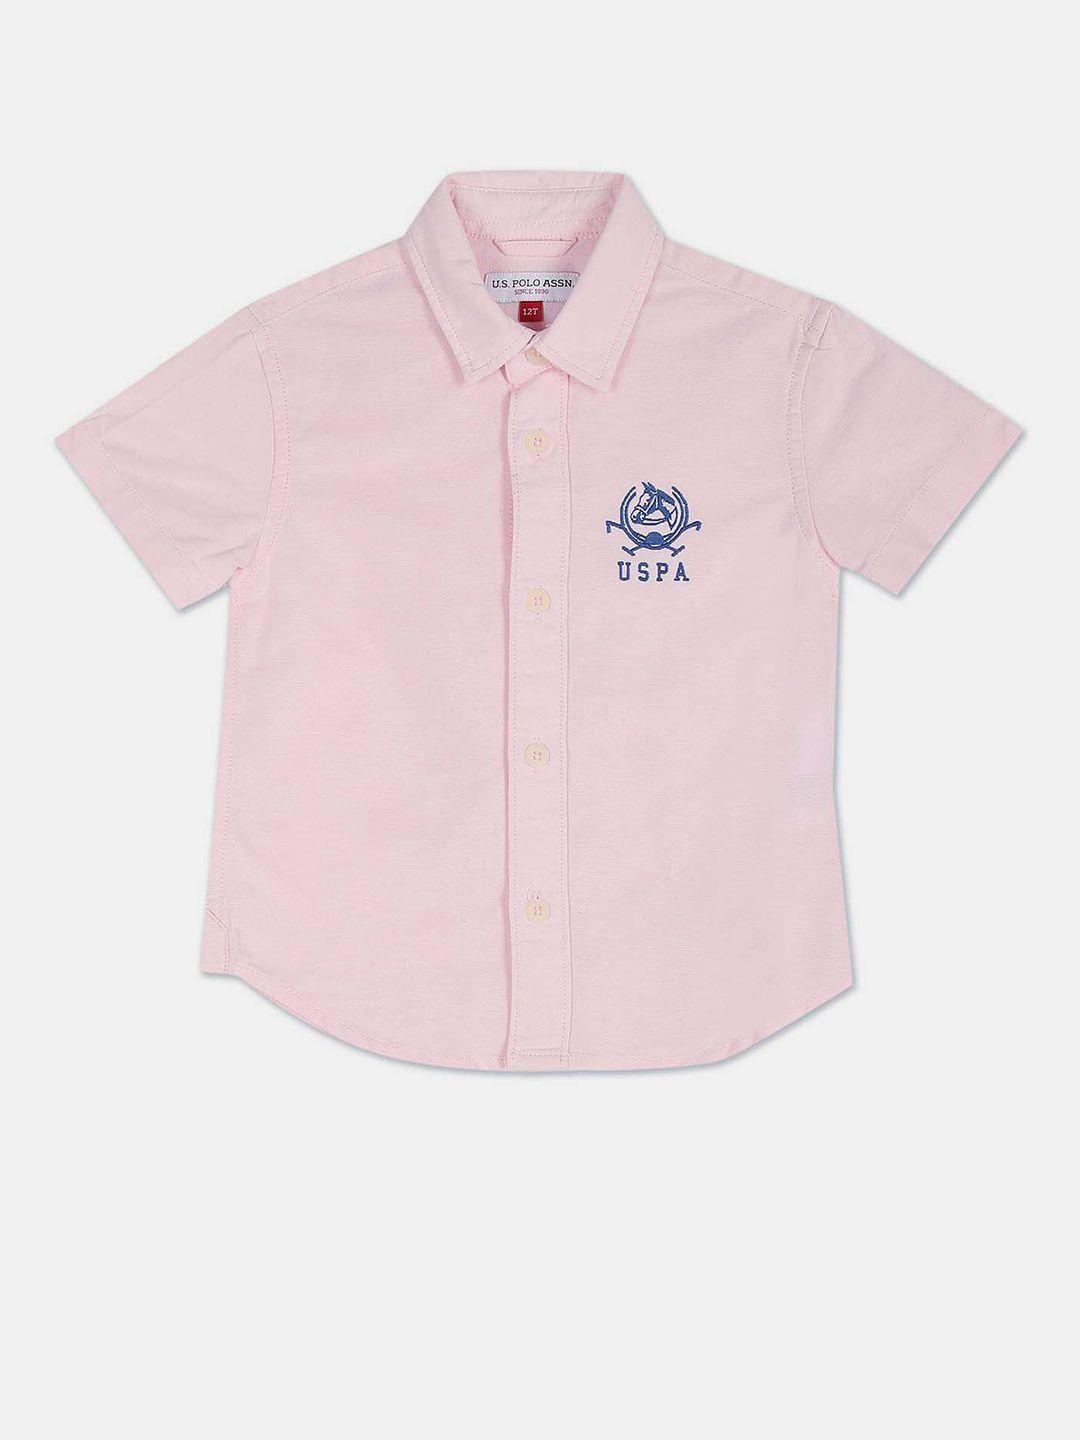 u-s-polo-assn-kids-boys-pink-pure-cotton-casual-shirt